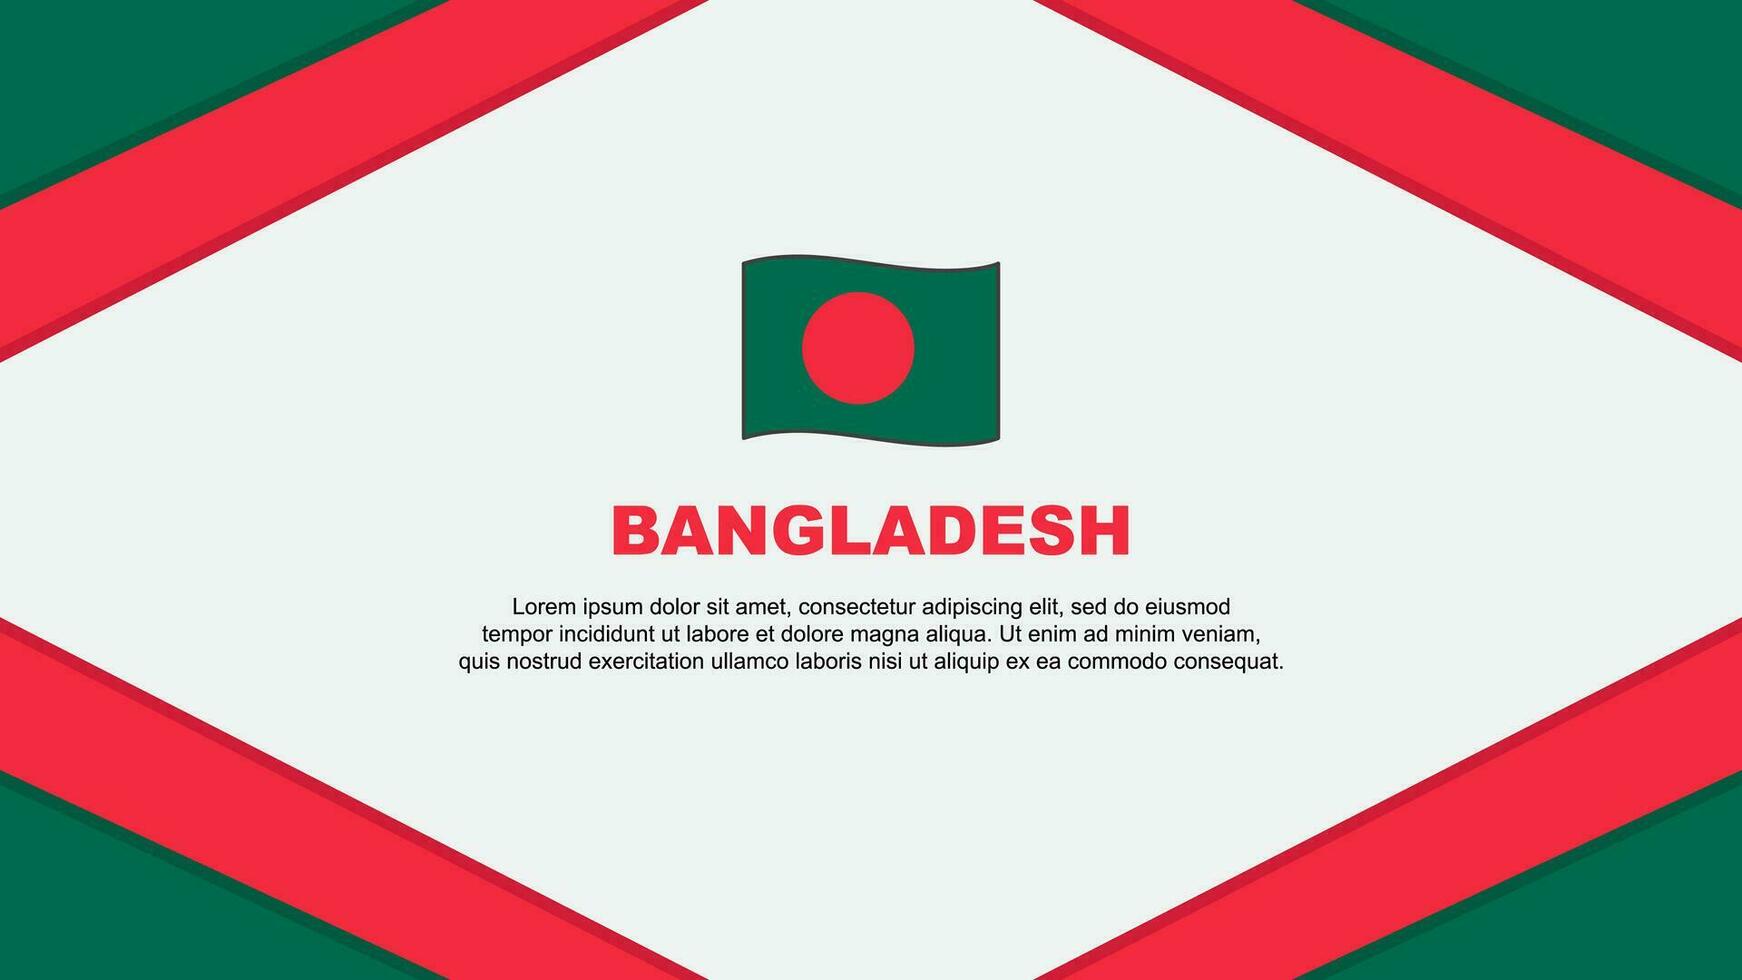 Bangladesh Flag Abstract Background Design Template. Bangladesh Independence Day Banner Cartoon Vector Illustration. Bangladesh Template